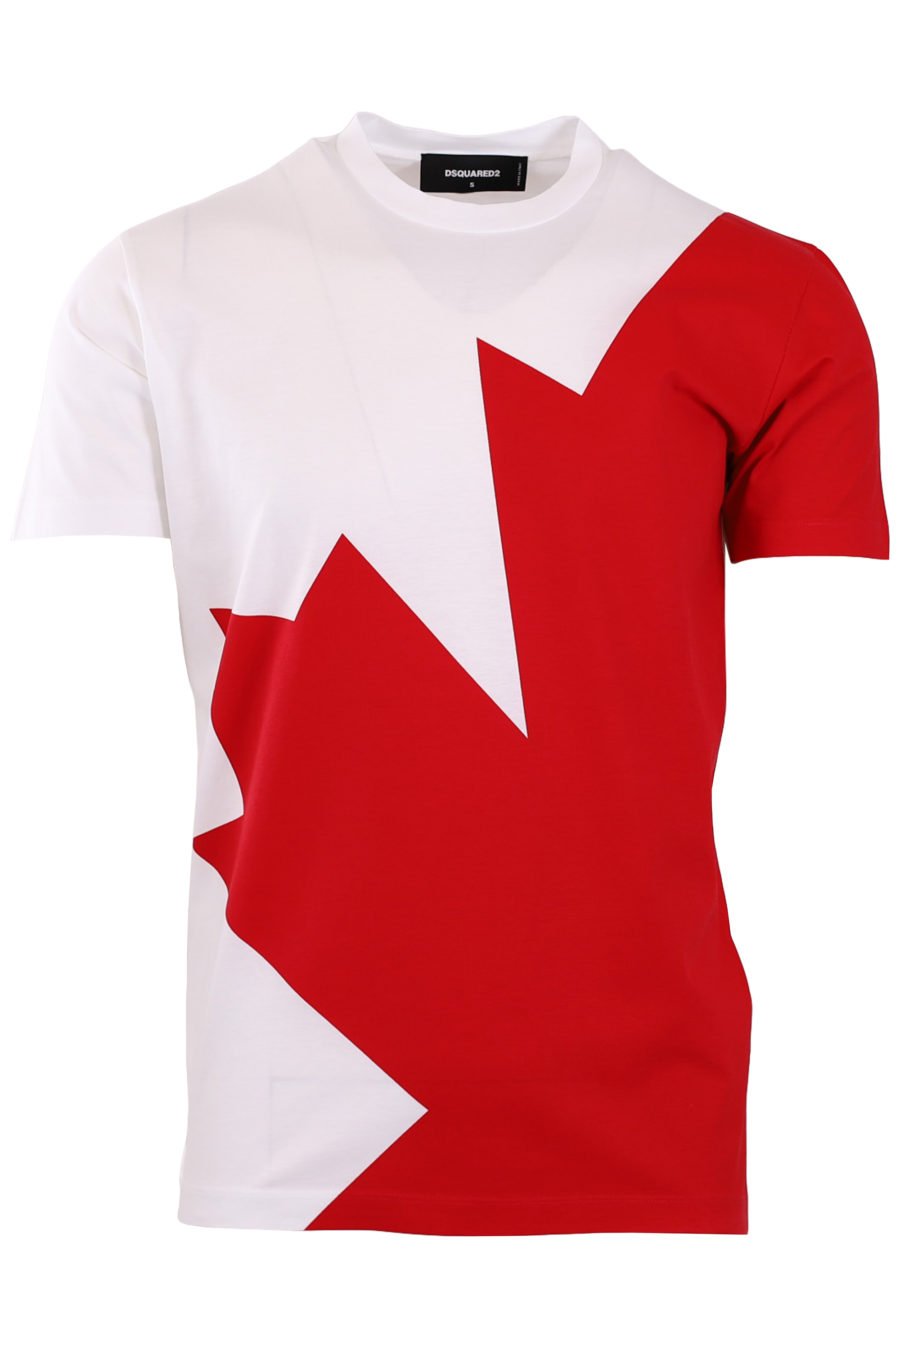 Camiseta blanca con estampado rojo - da32f0cf28db0518d8db01a512e75b9cd5d22fb3